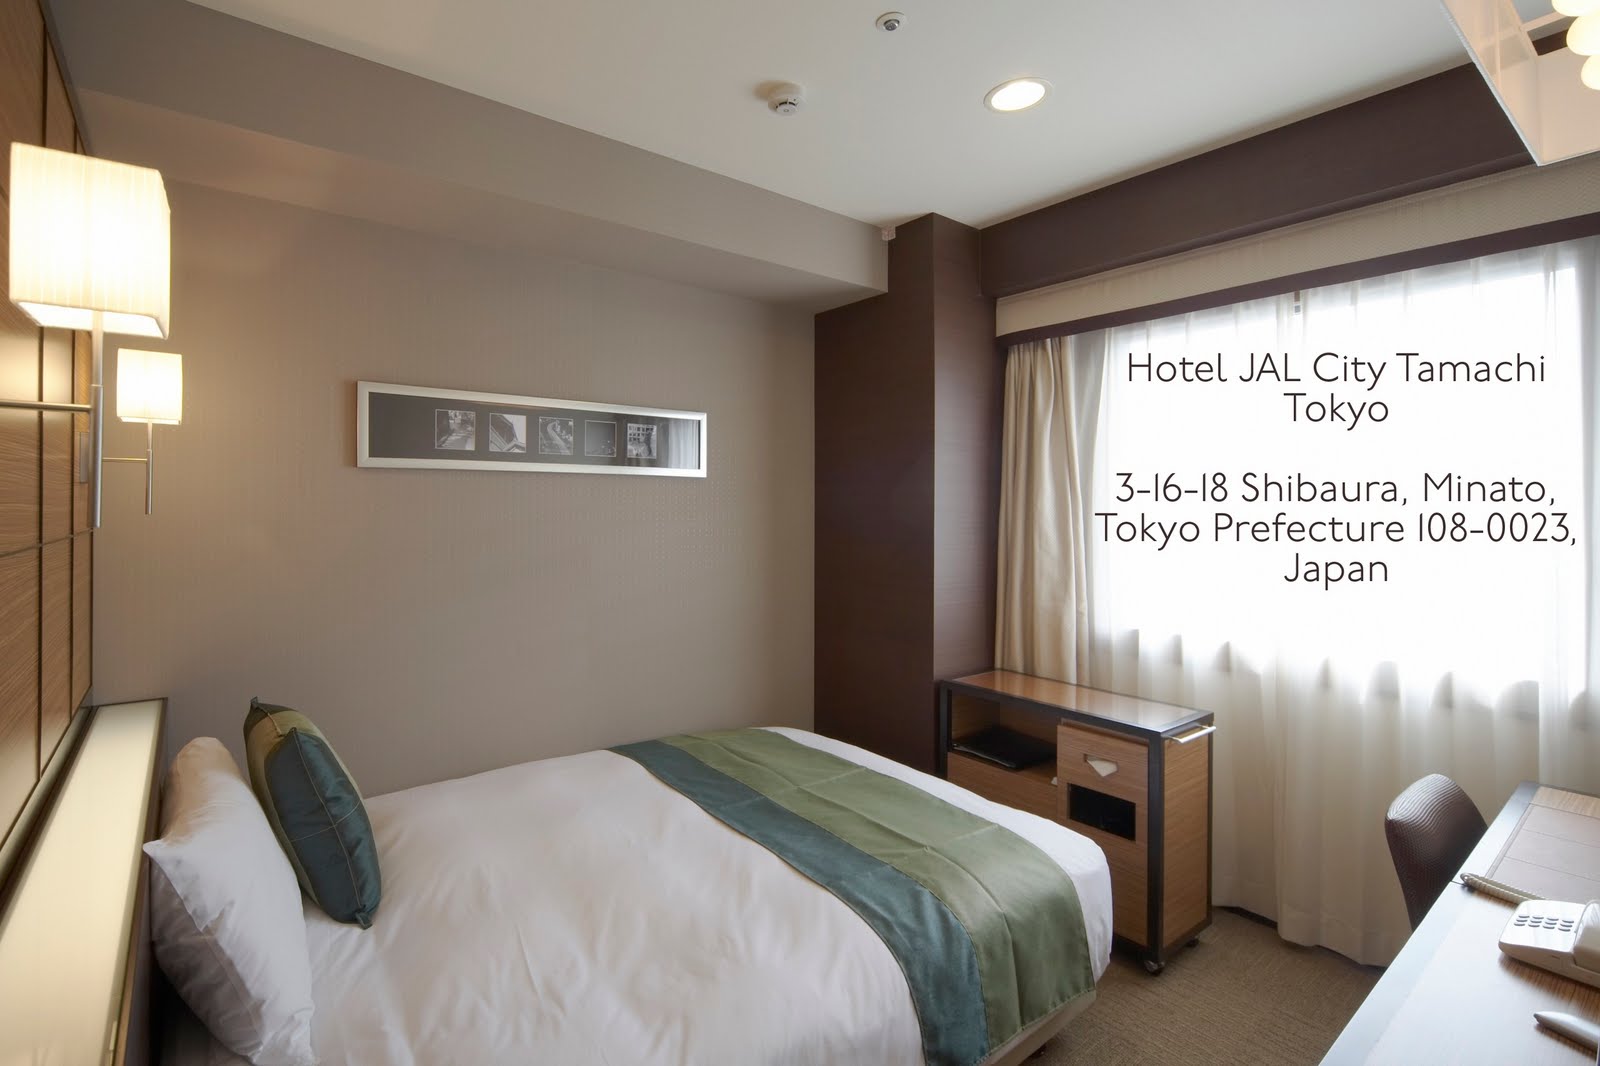 Hotel Jal City Tamachi Tokyo への1件のフィードバック